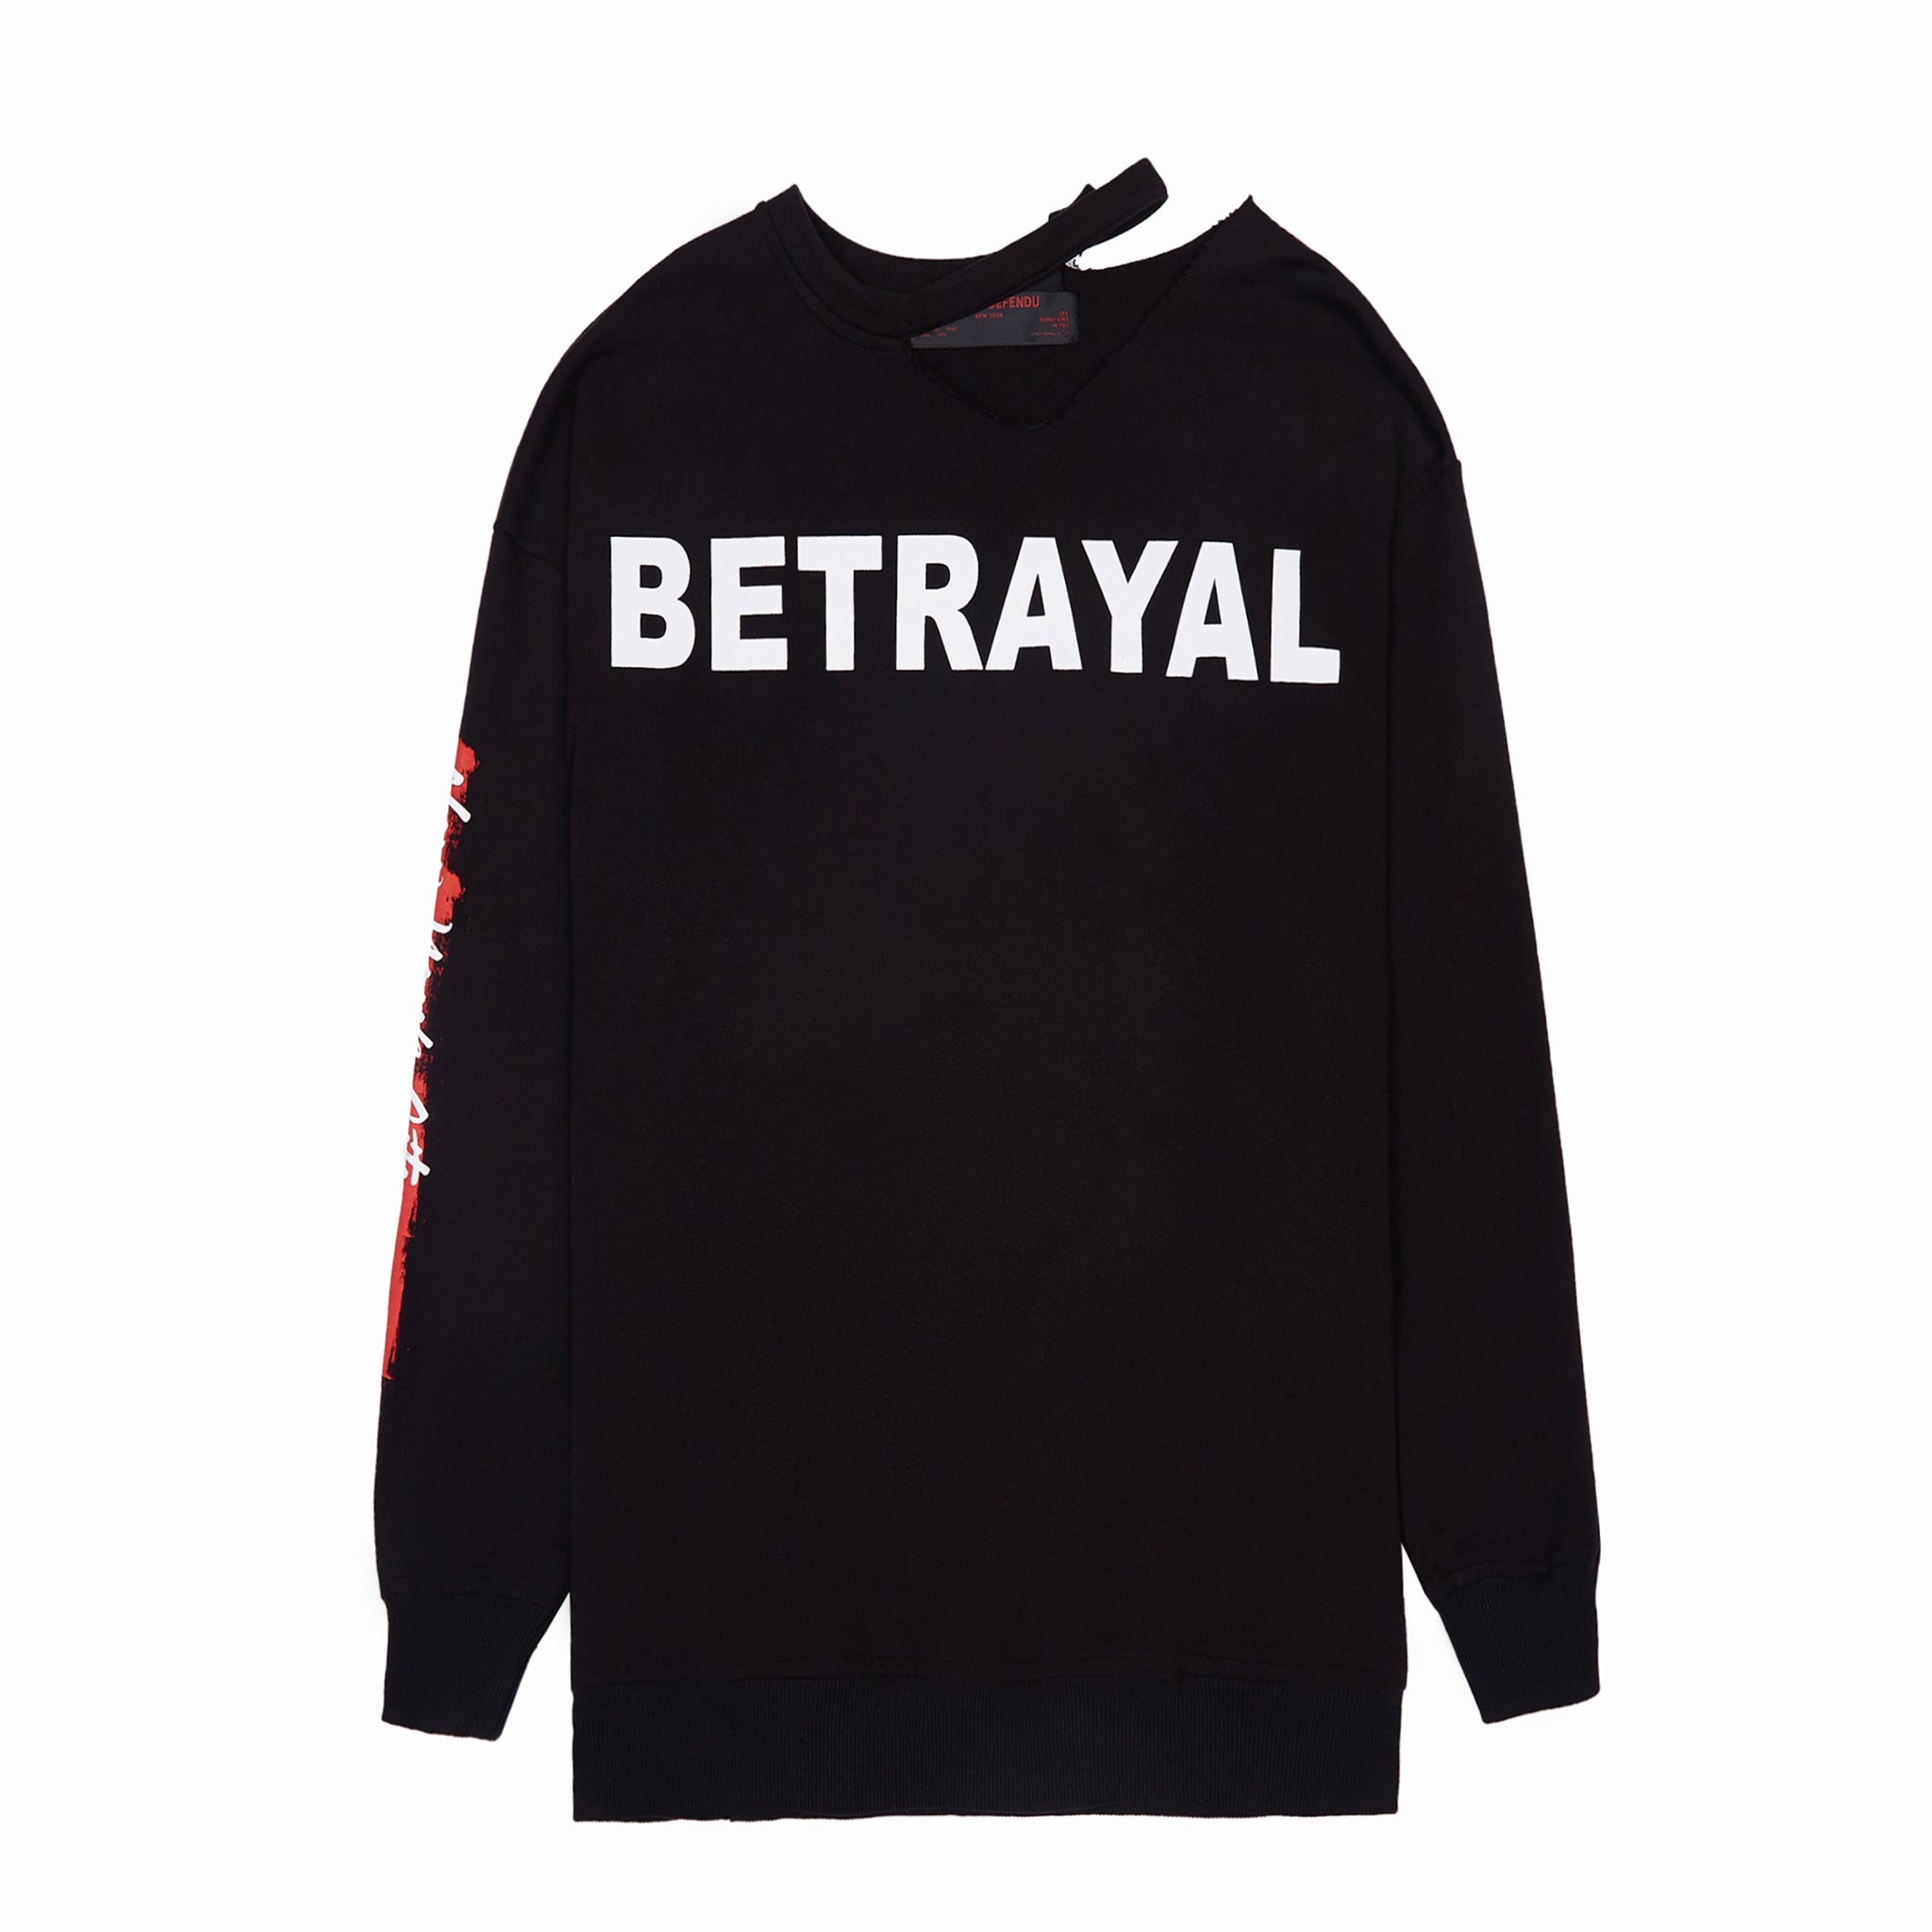 Le Fruit Defendu Betrayal Sweatshirt - Black